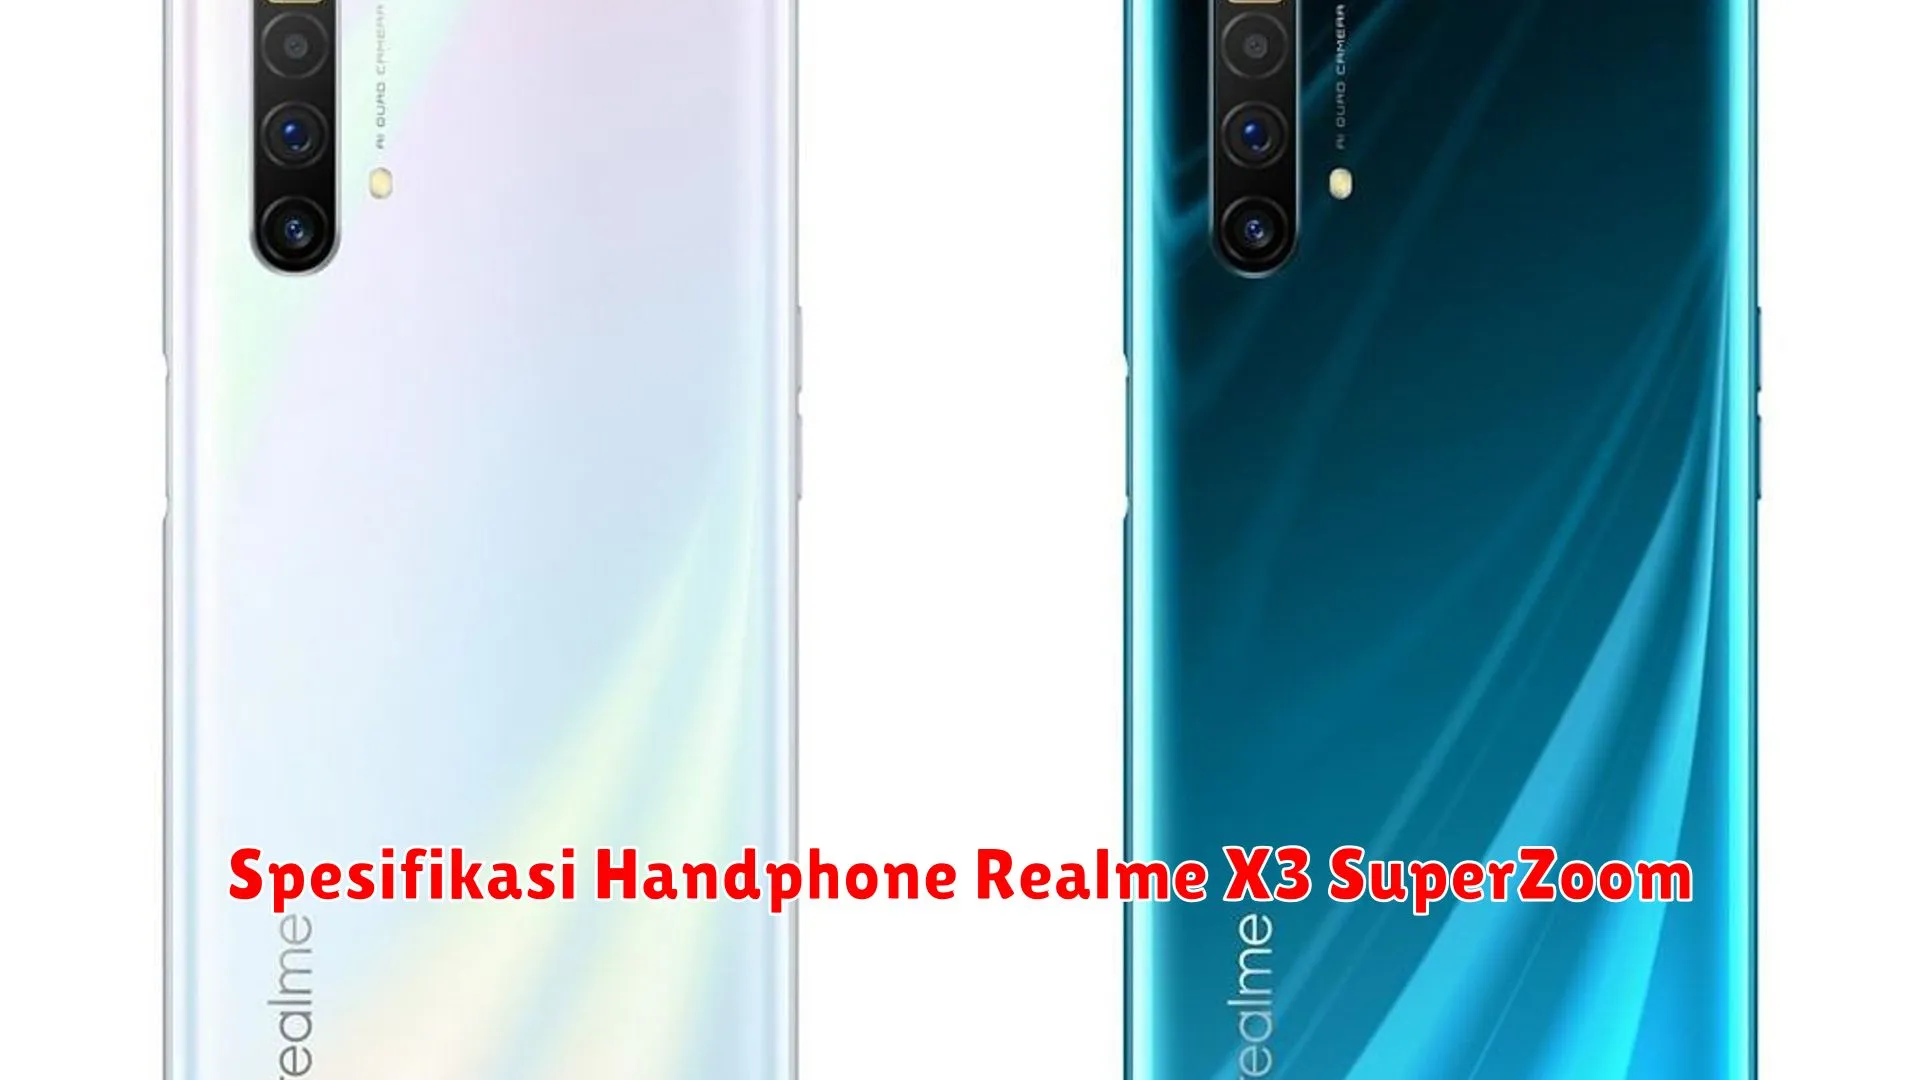 Spesifikasi Handphone Realme X3 SuperZoom